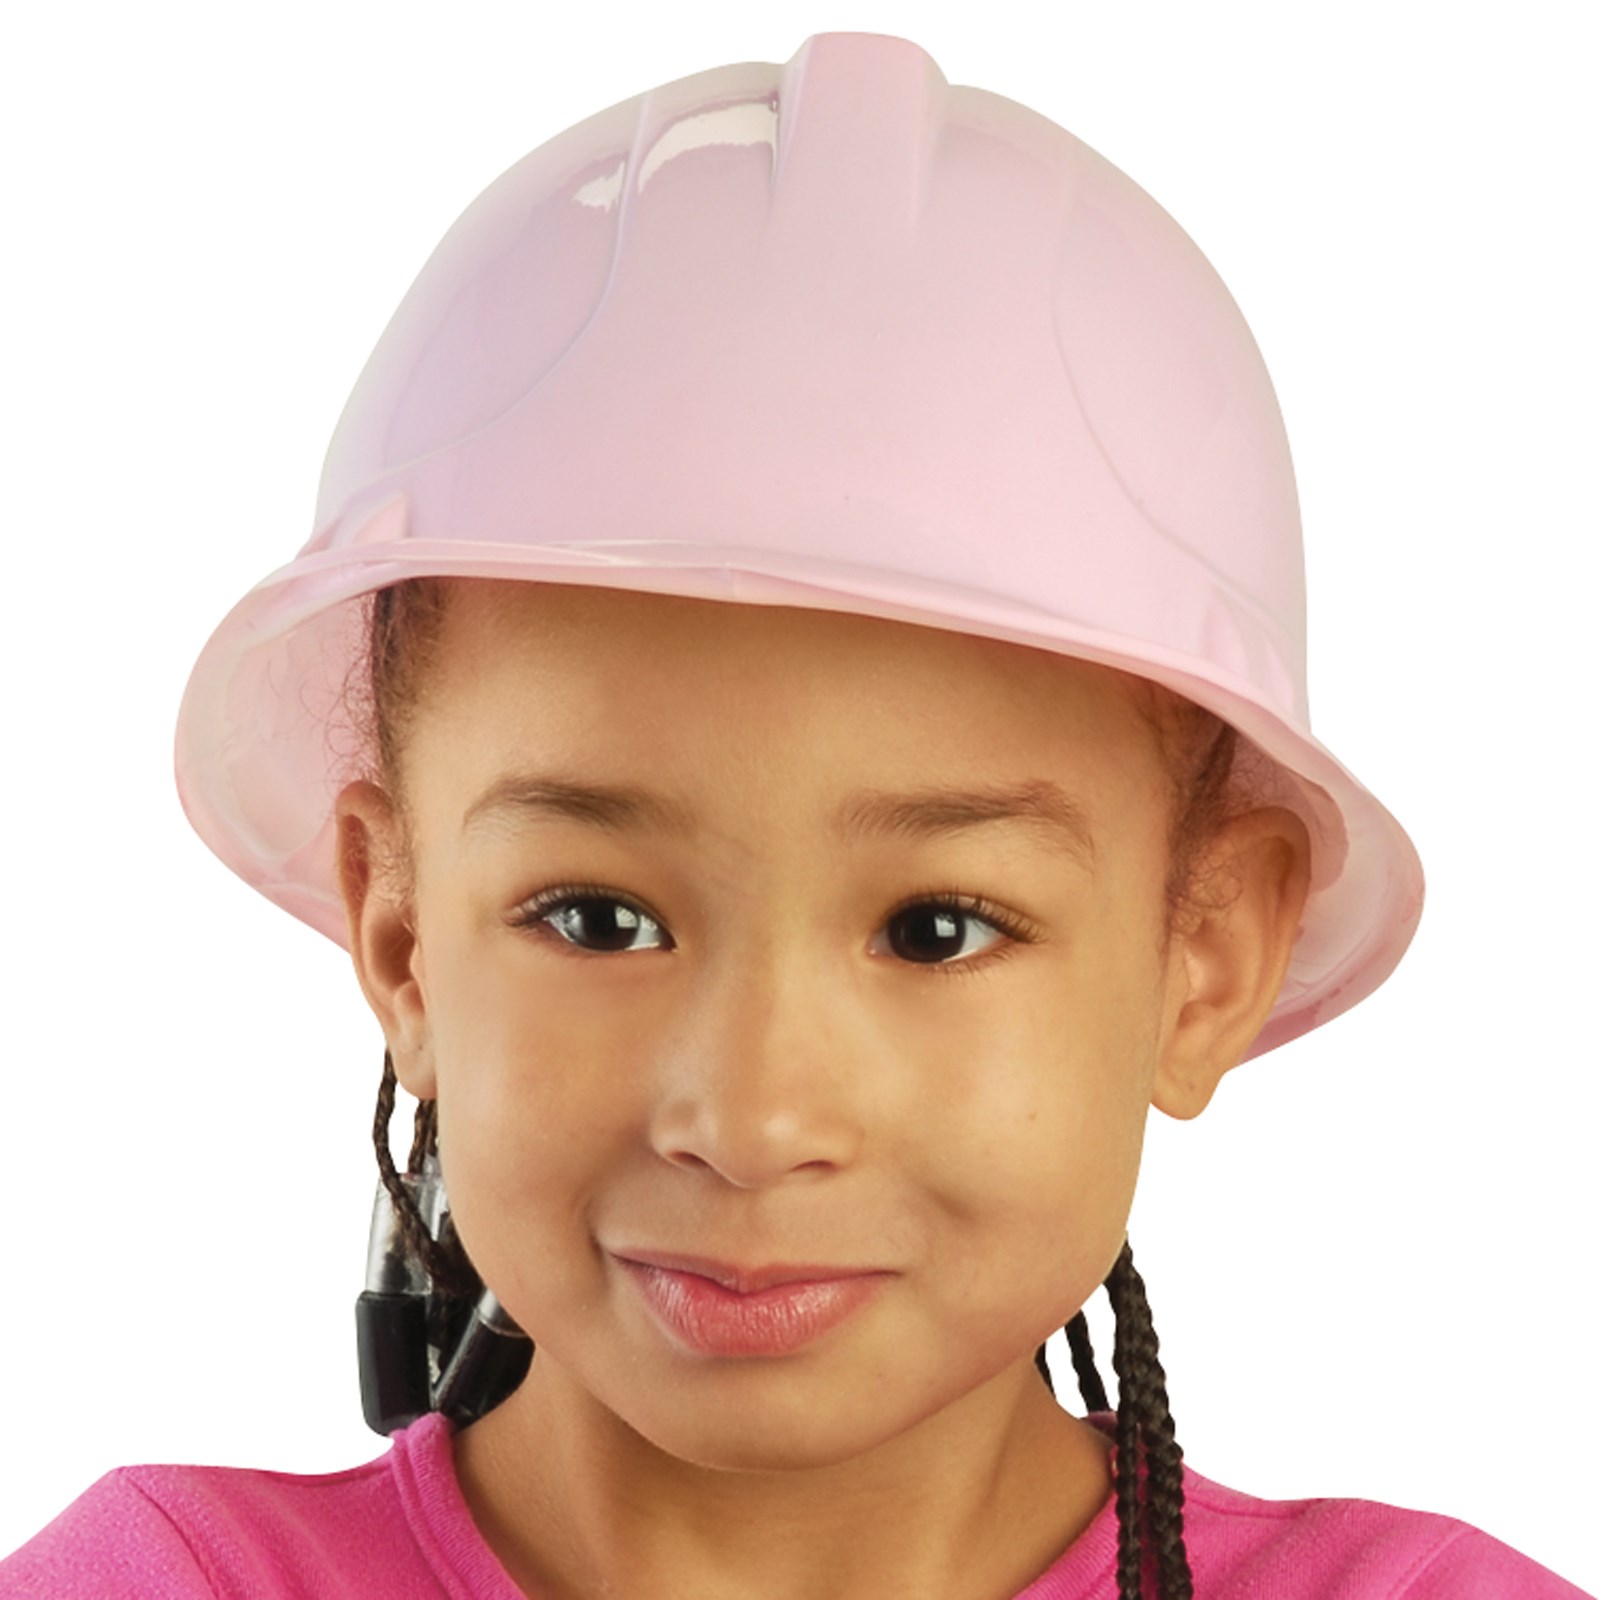 Pink Plastic Construction Hat Child